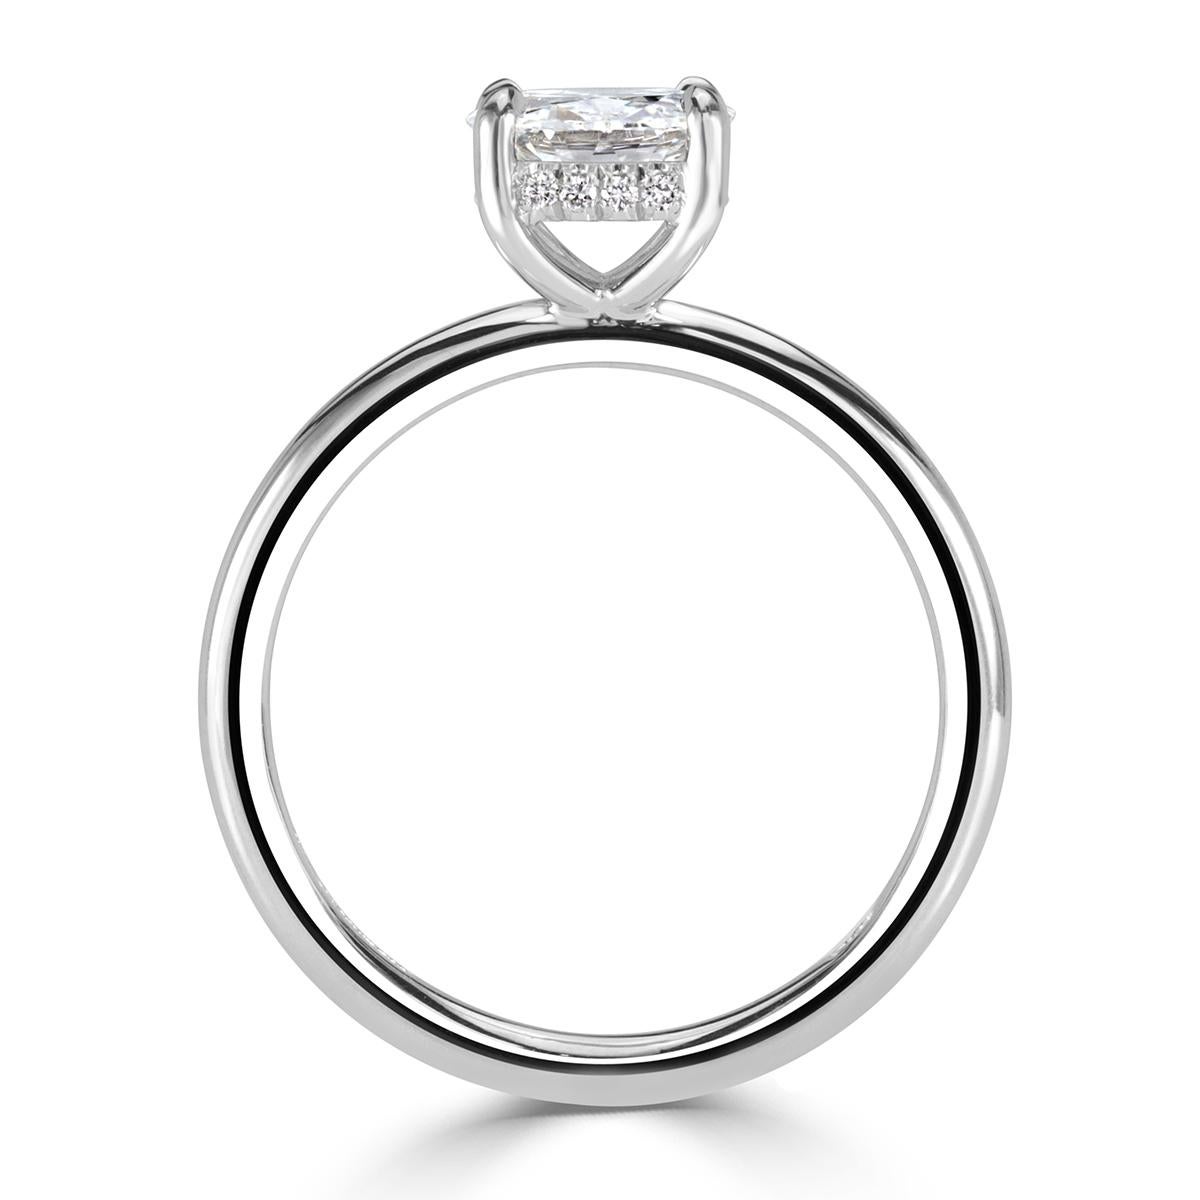 Women's or Men's Mark Broumand 1.09 Carat Old Mine Cut Diamond Engagement Ring